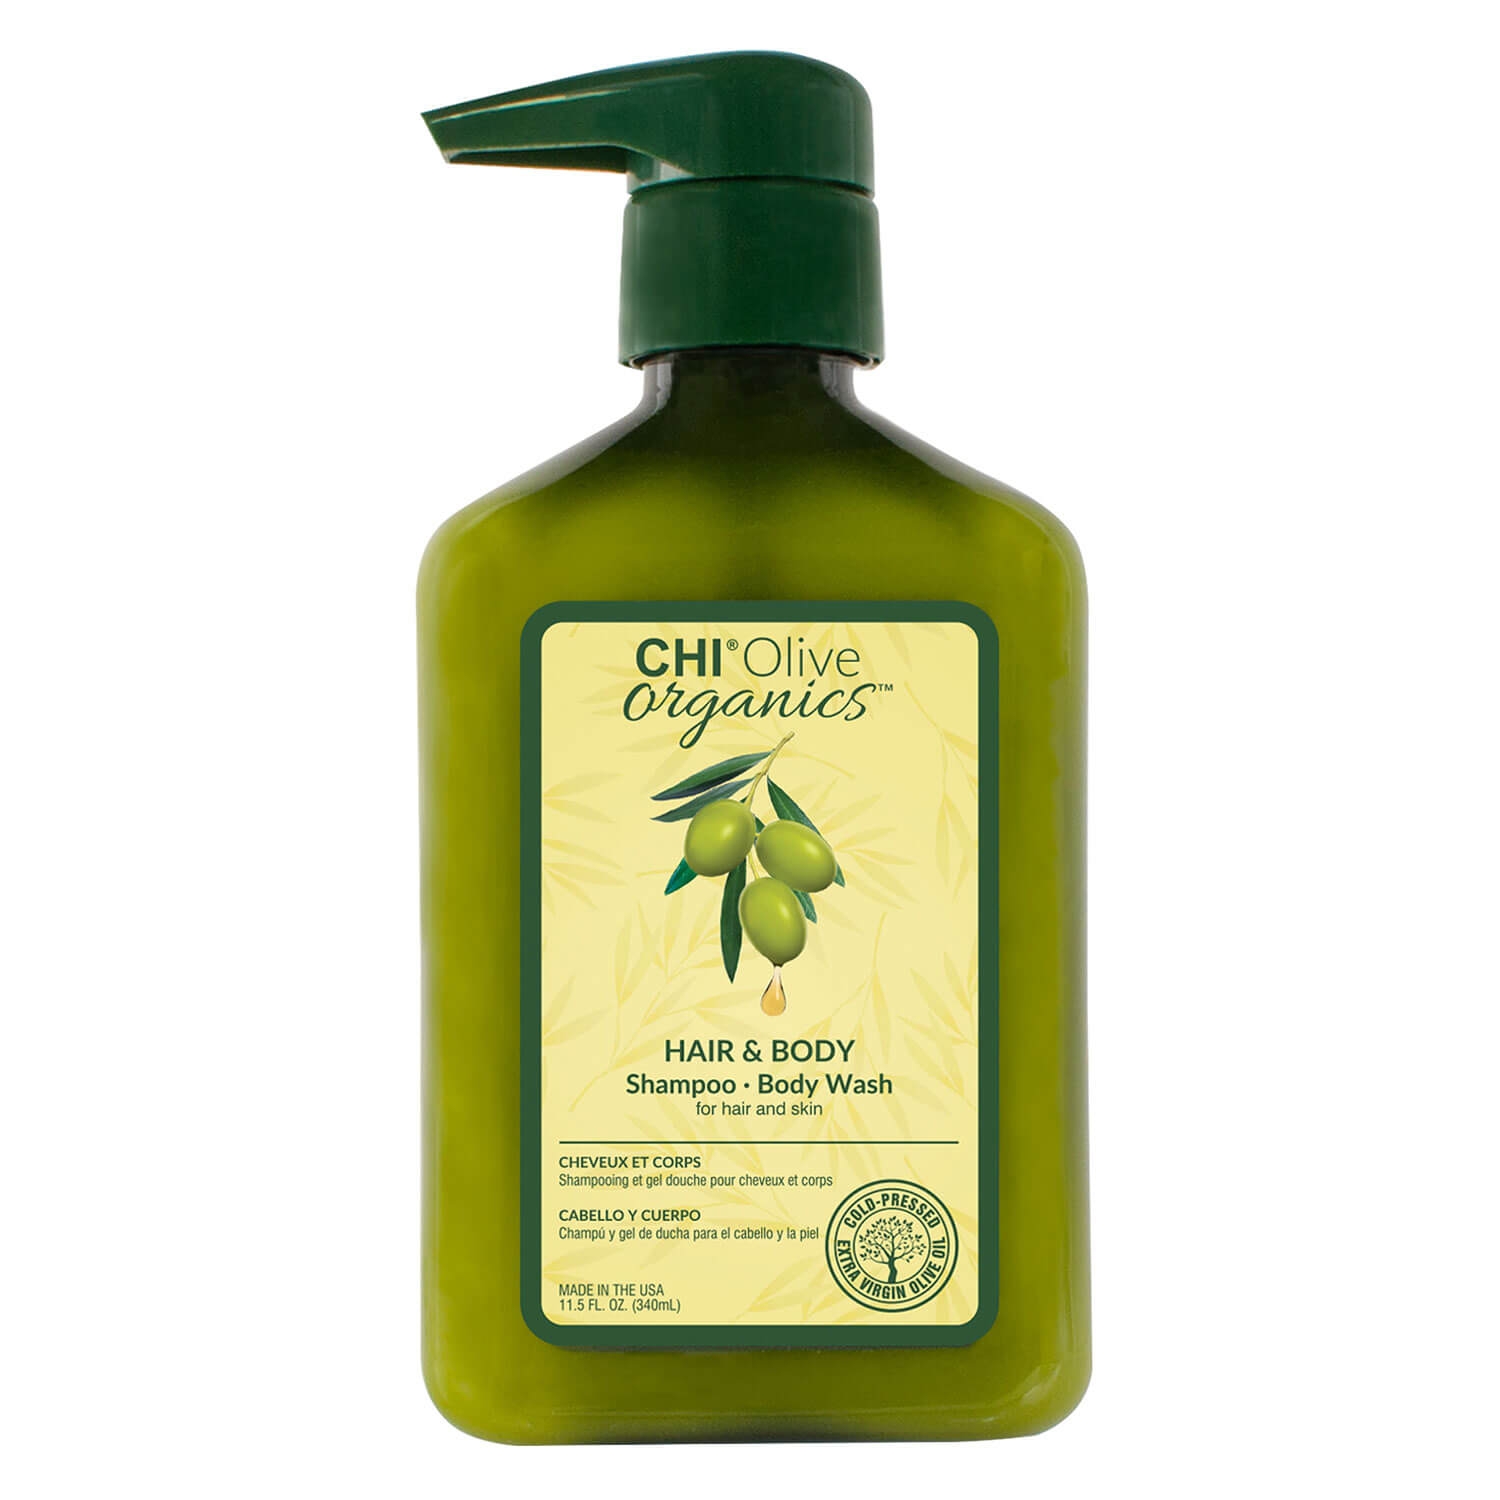 Produktbild von CHI Olive Organics - Hair & Body Shampoo